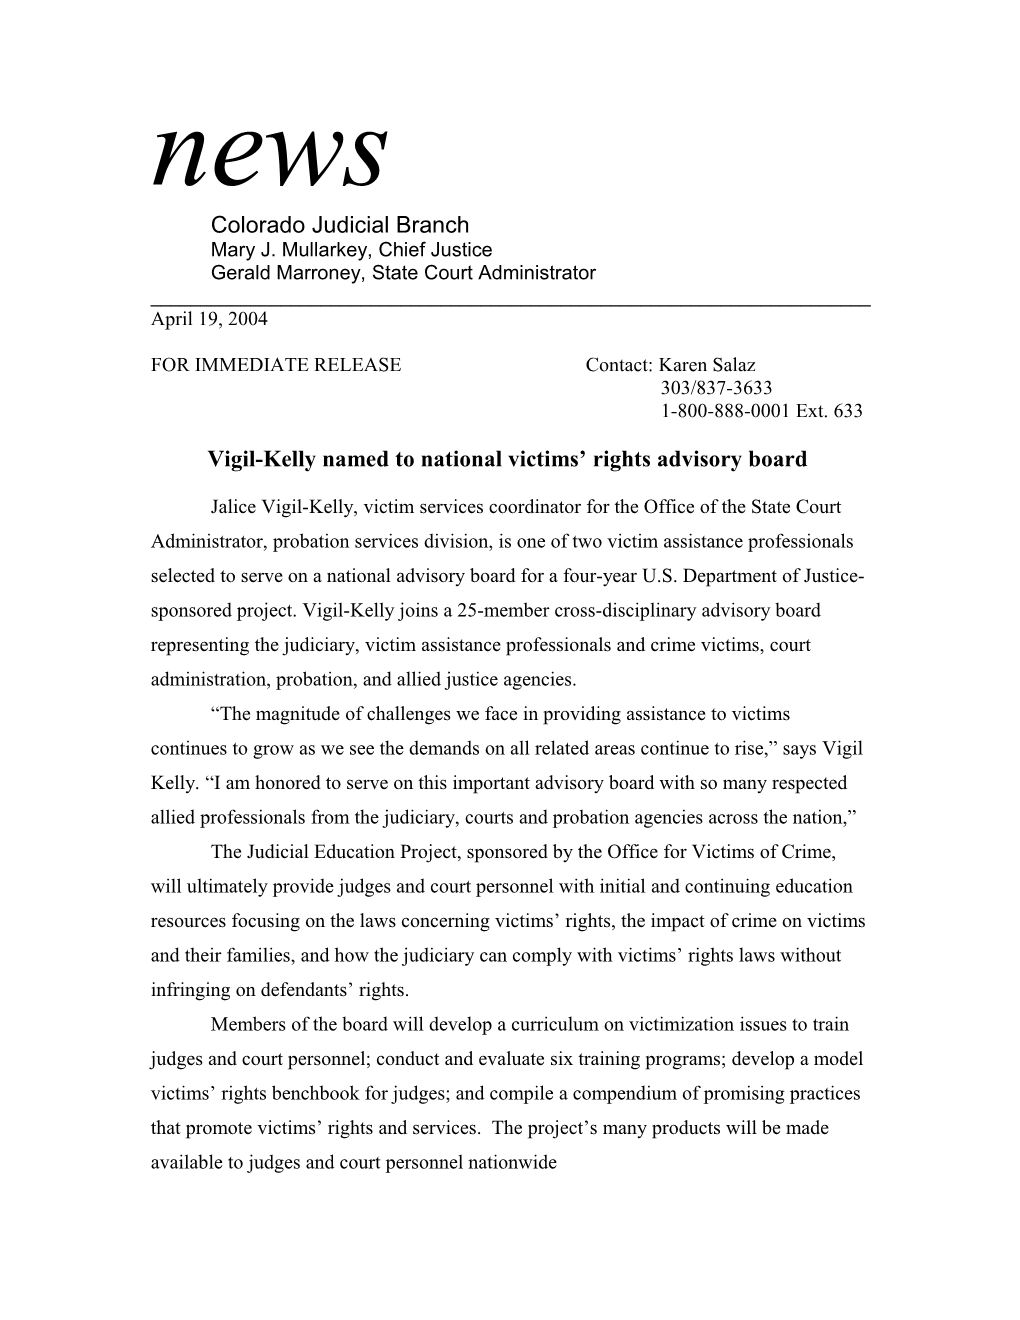 Vigil-Kelly Named to National Victims Rights Advisory Board